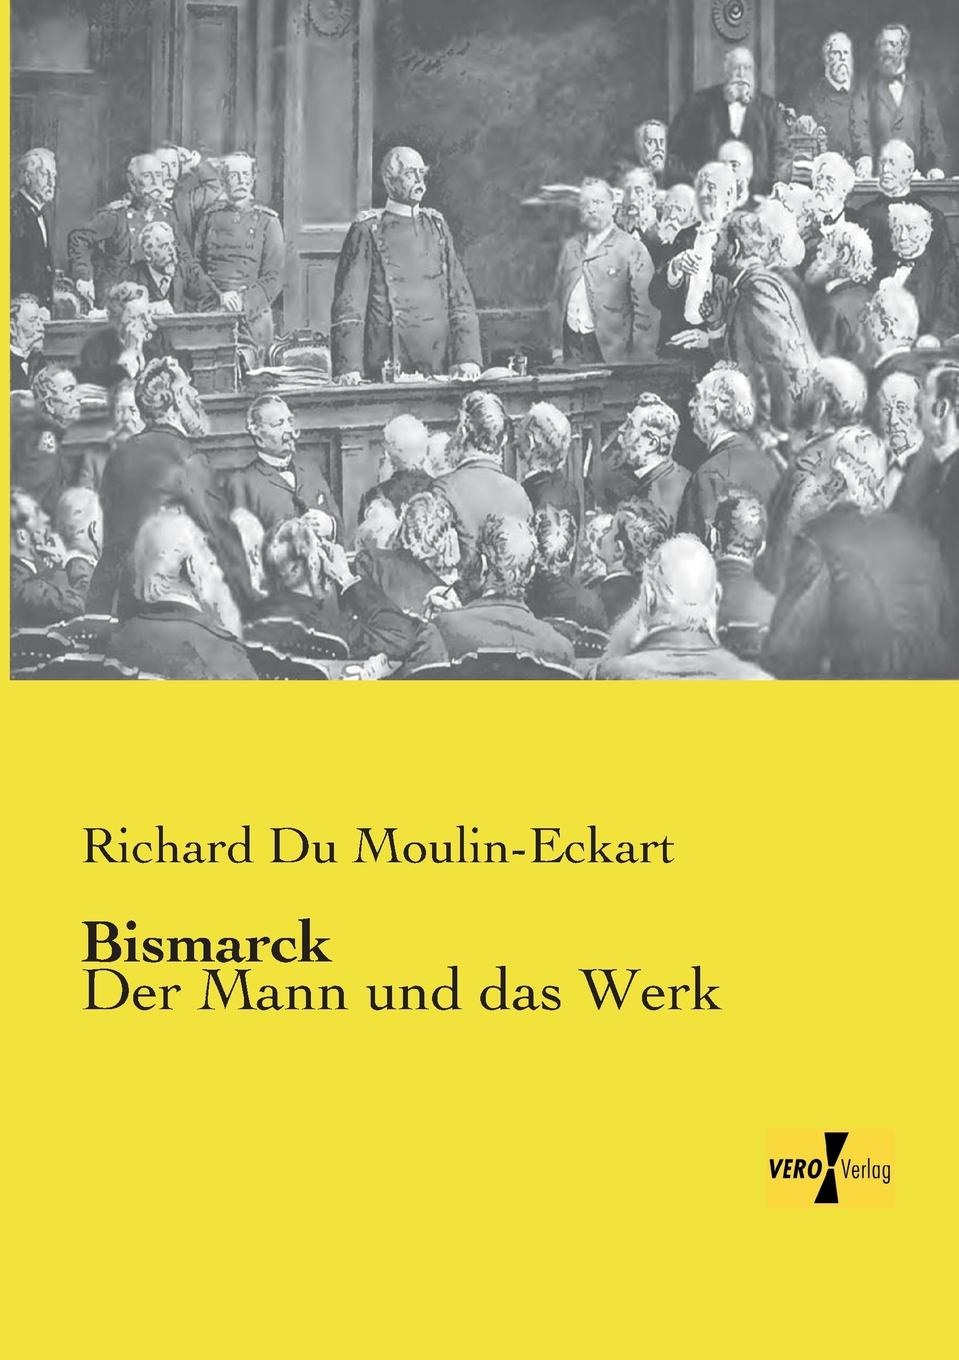 Richard Du Moulin-Eckart Bismarck